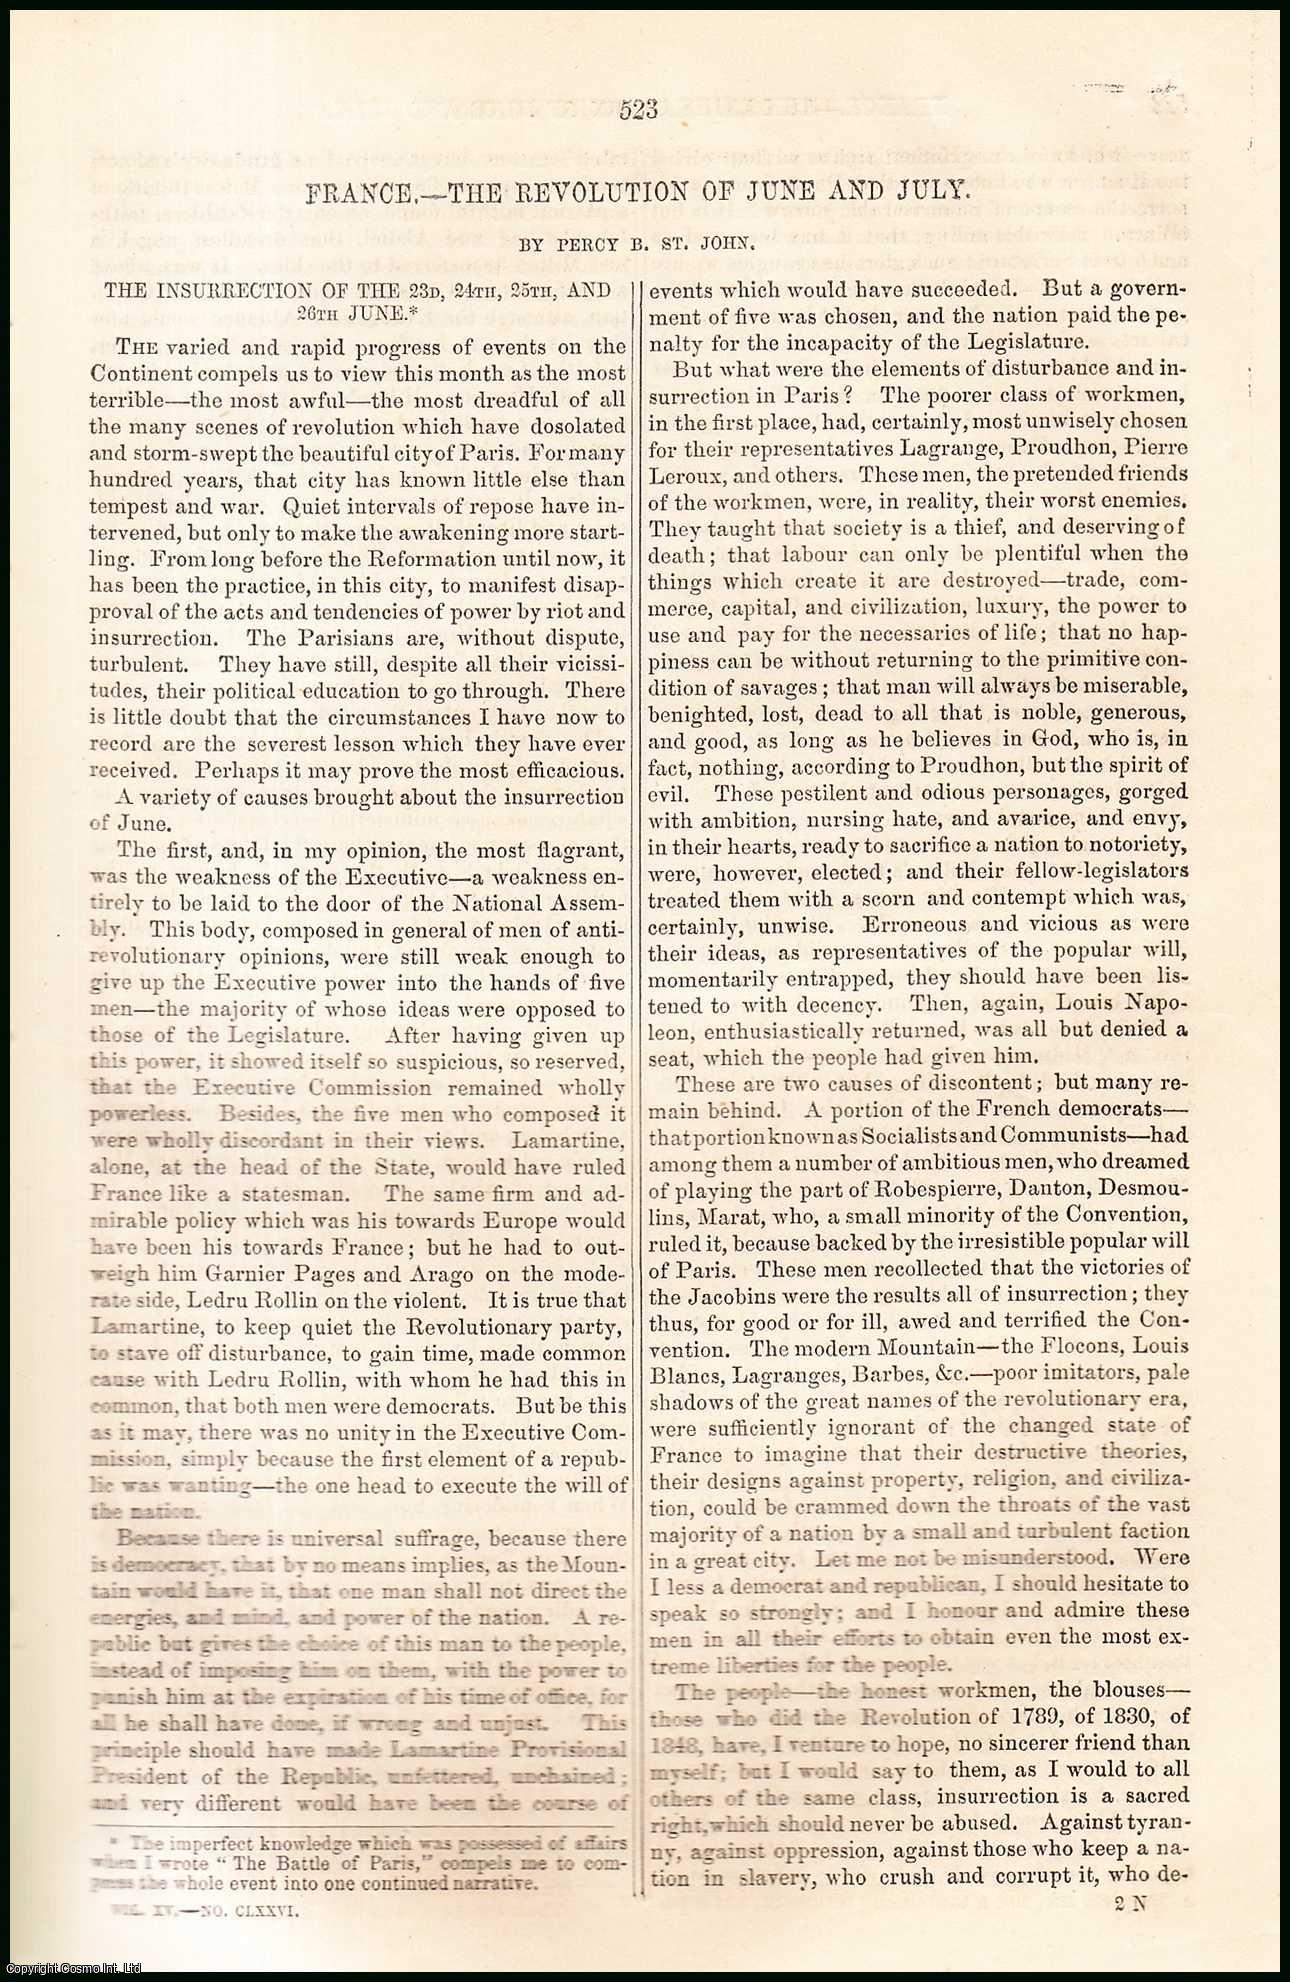 Percy B. St. John - France : the Revolution of June & July. An original article from Tait's Edinburgh Magazine, 1848.